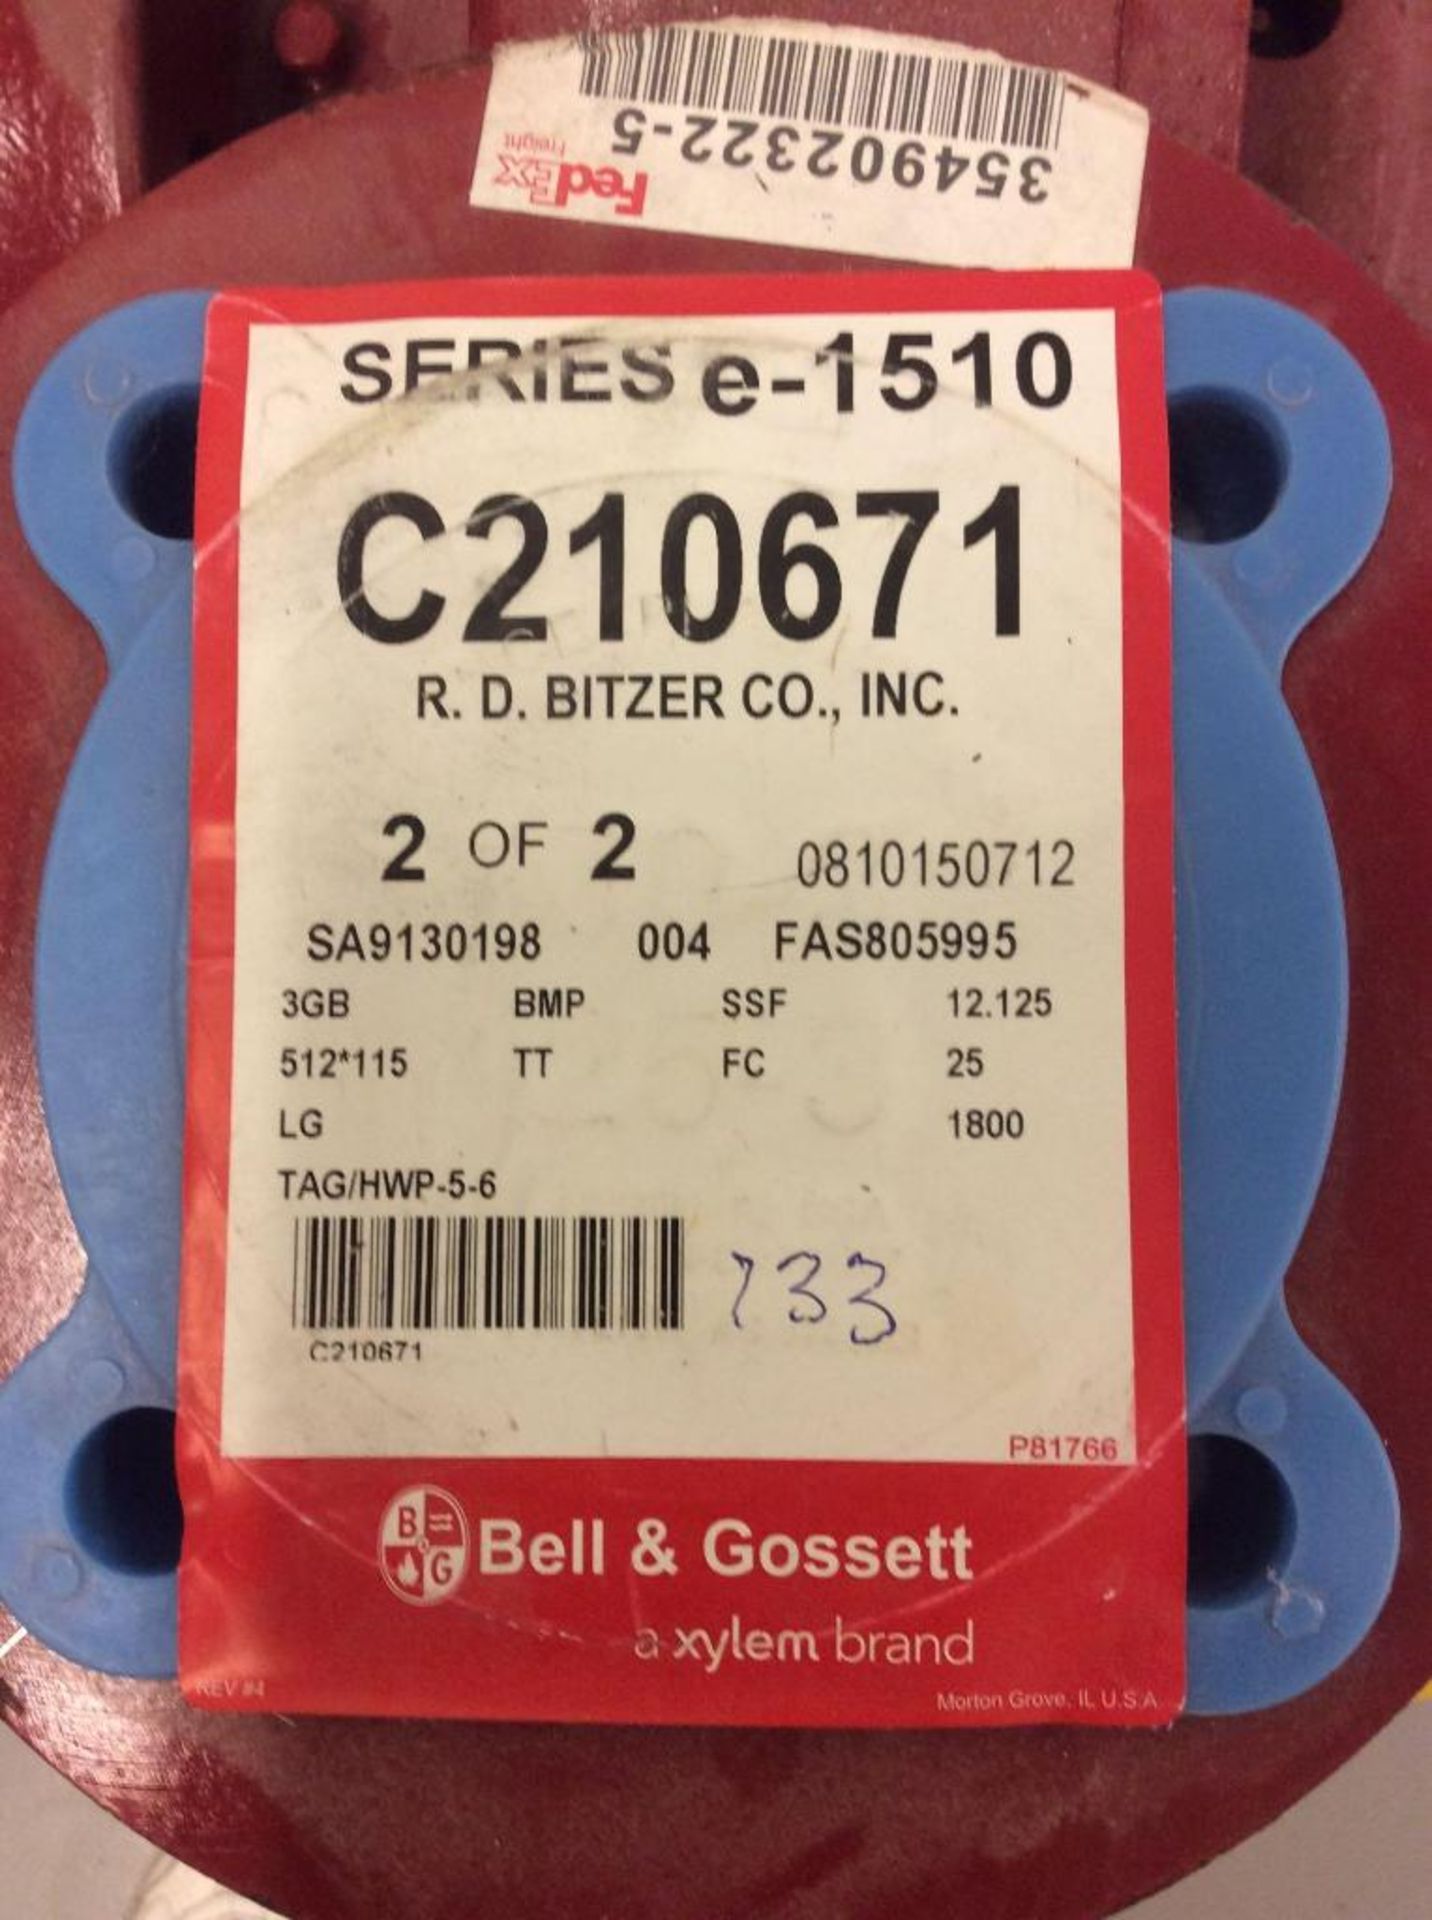 Bell and Gossett pump set, 25 hp, 1800 rpm, 512 gal per minute - Image 2 of 2